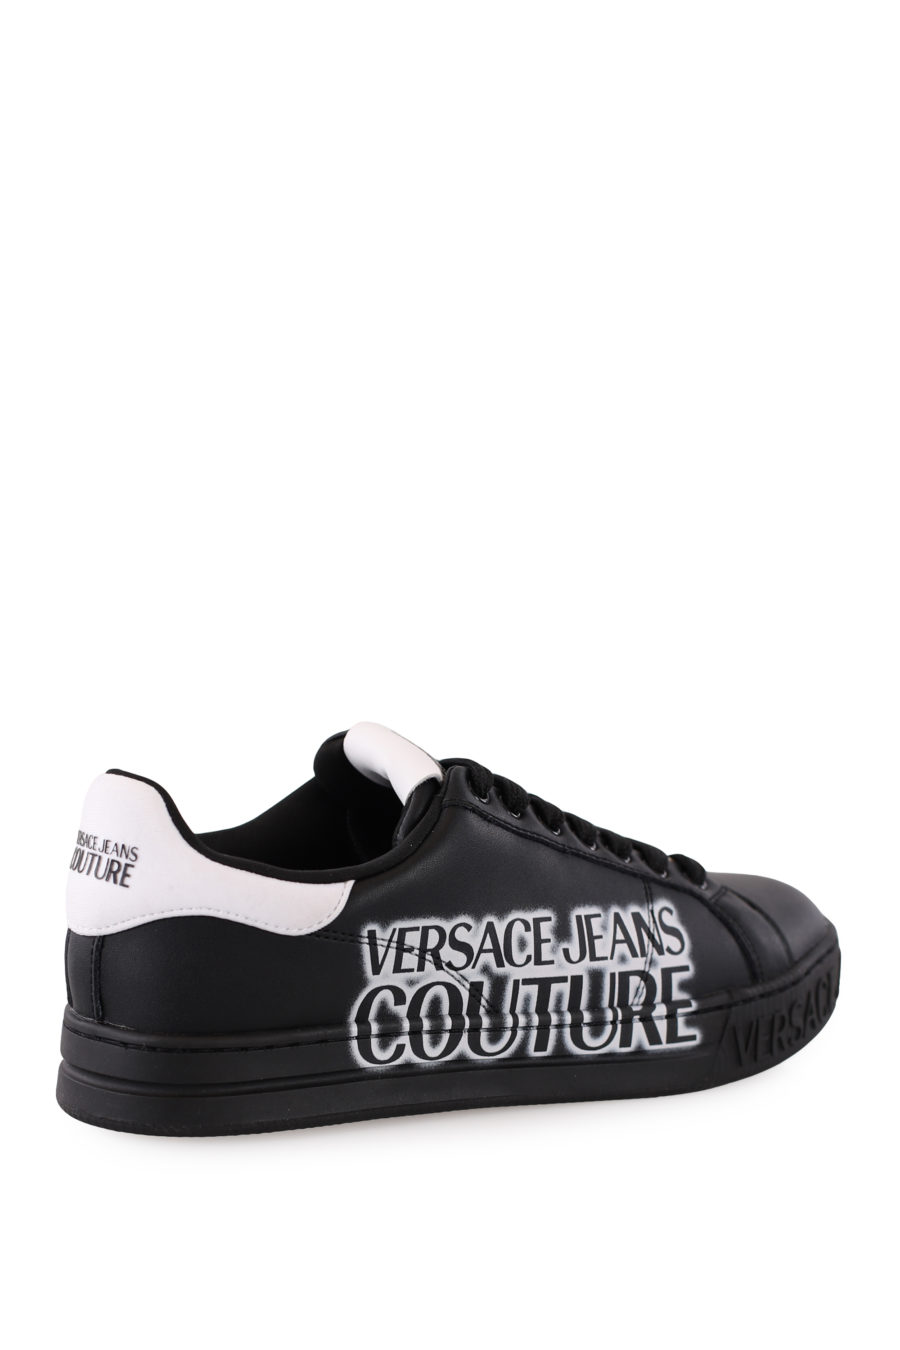 Zapatillas negras "Court 88" con logotipo blanco - IMG 9064